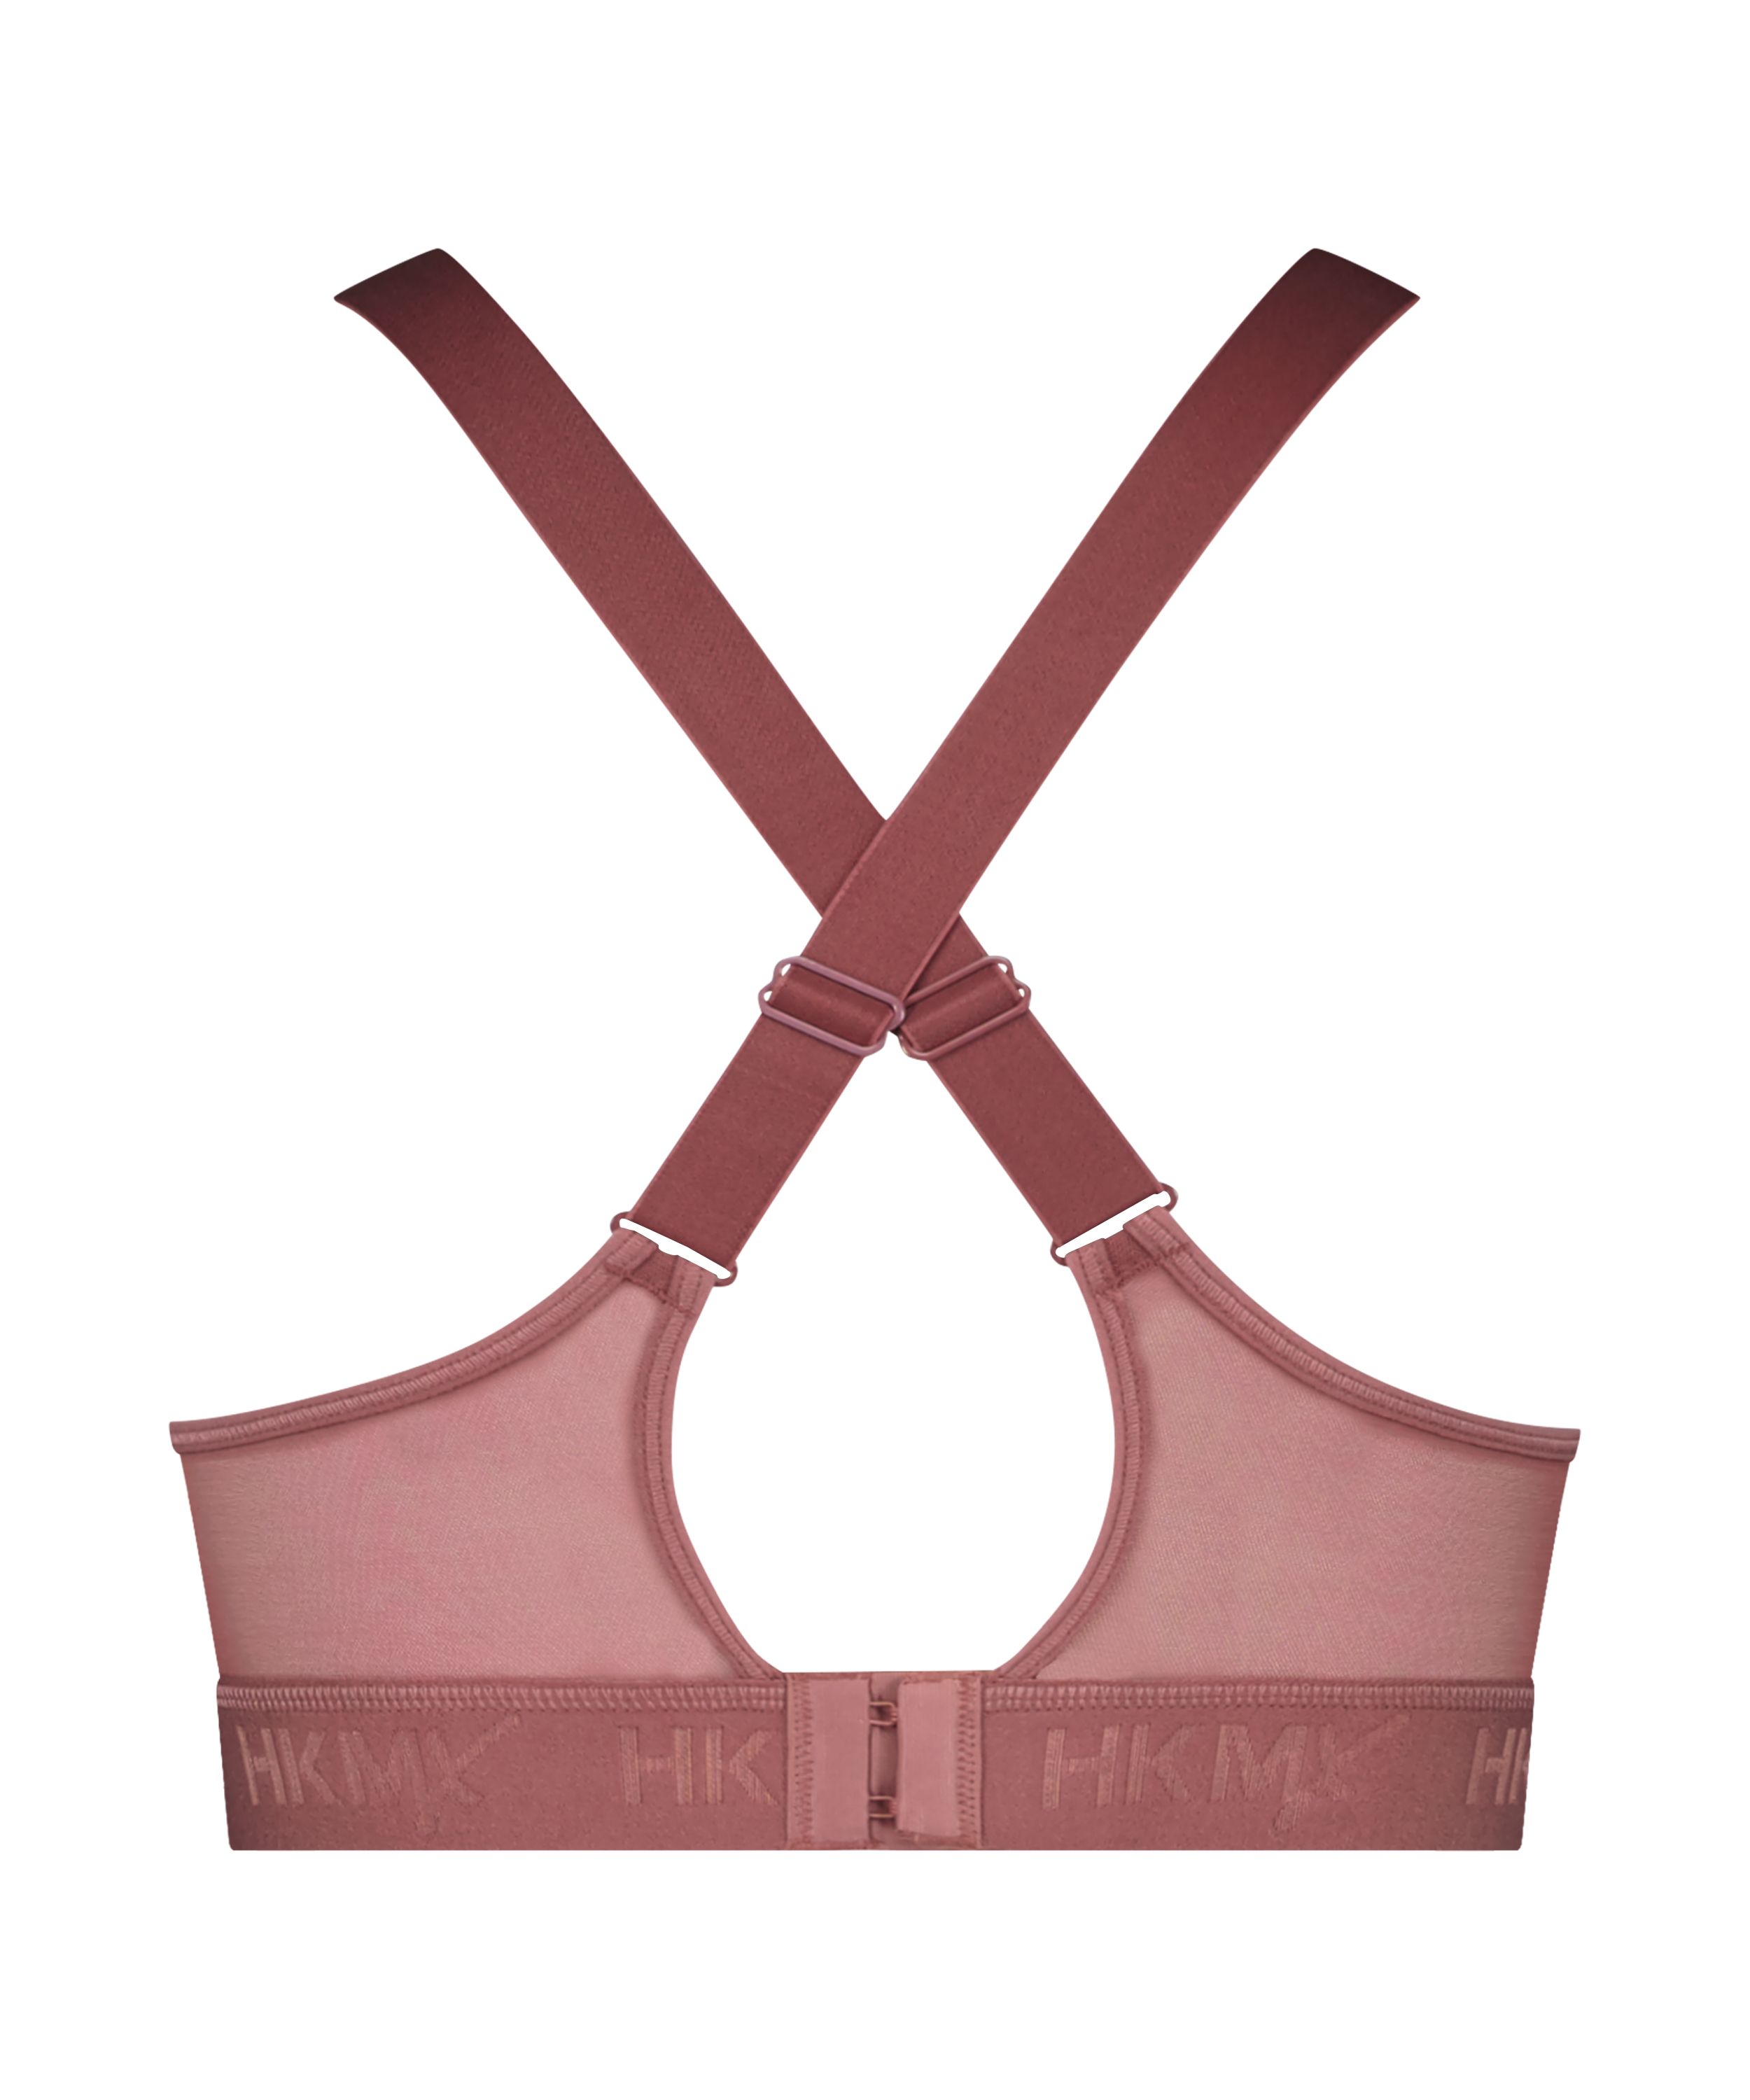 HKMX Sports bra The All Star Level 2, Pink, main